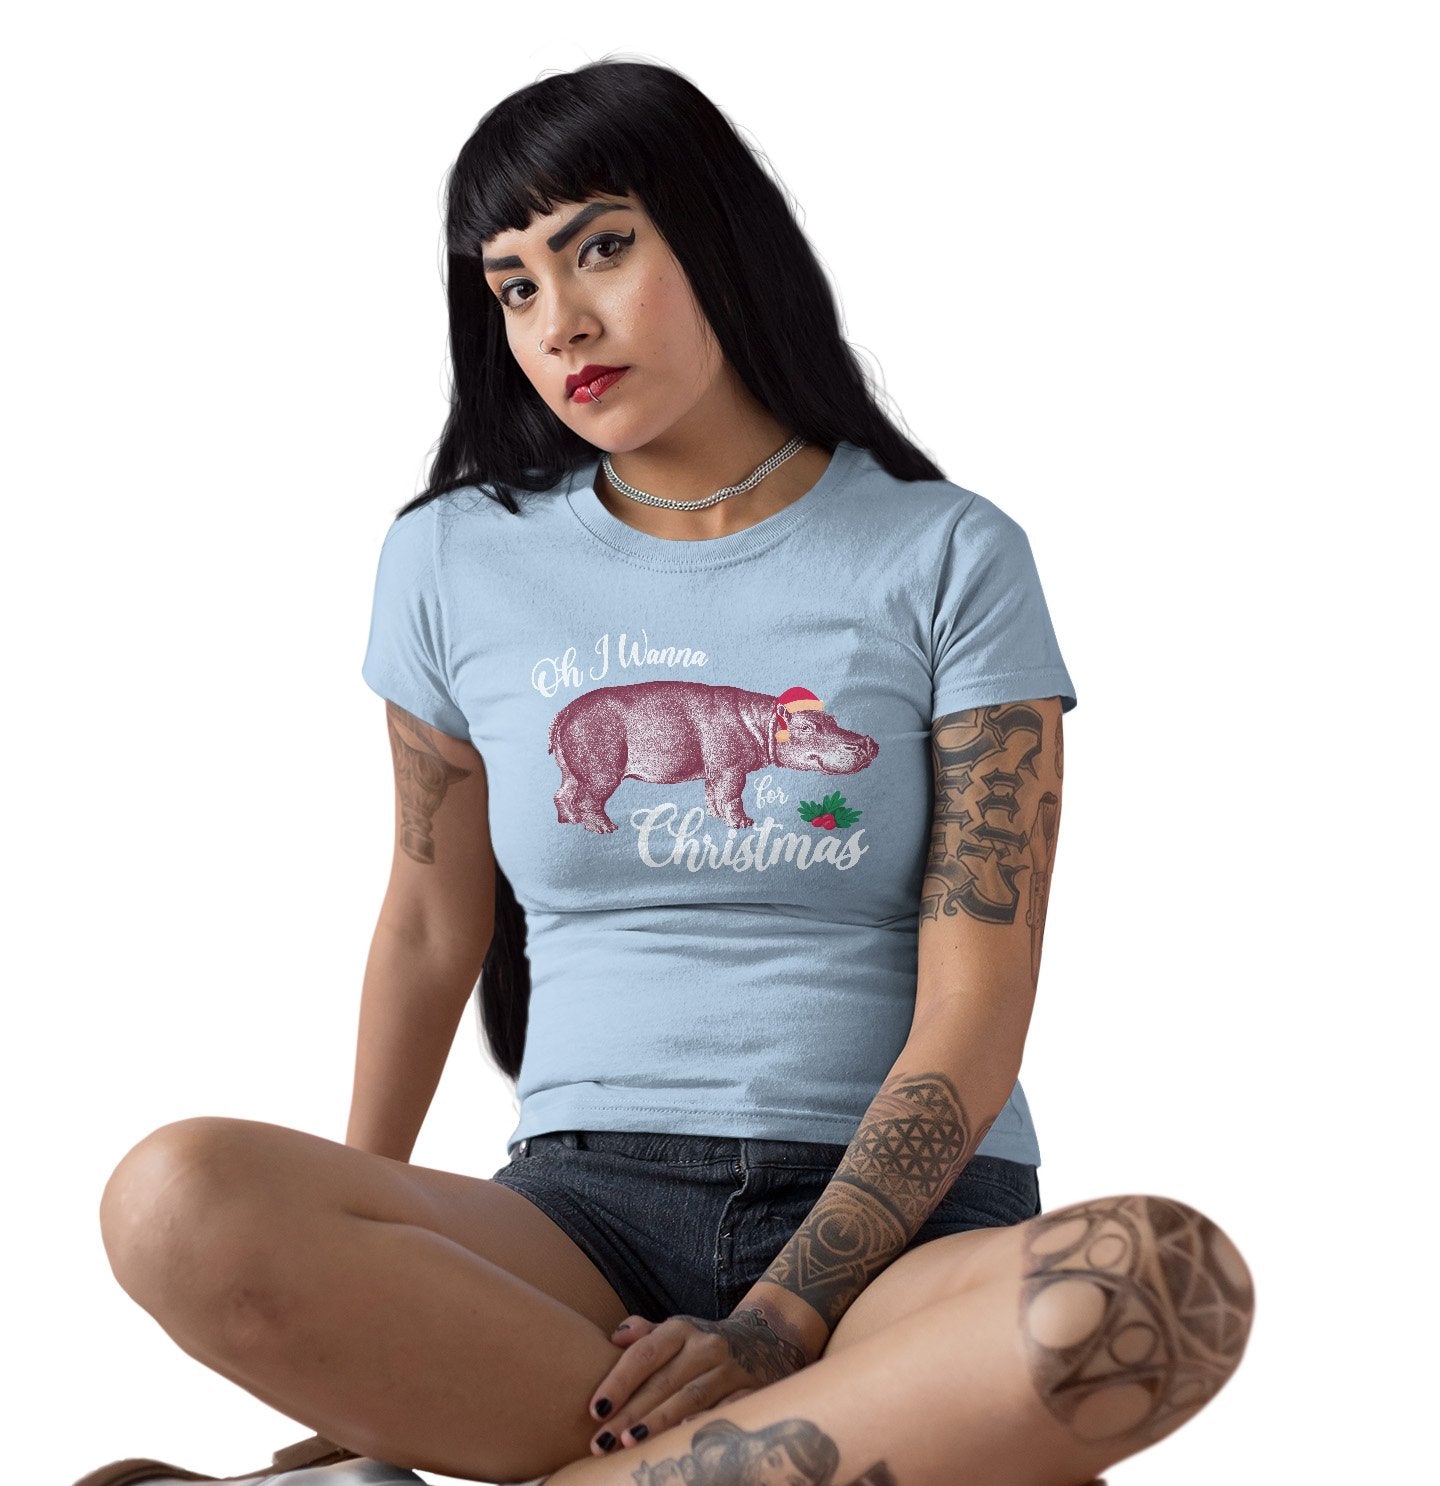 Hippopotamus for Christmas - Women's Fitted T-Shirt